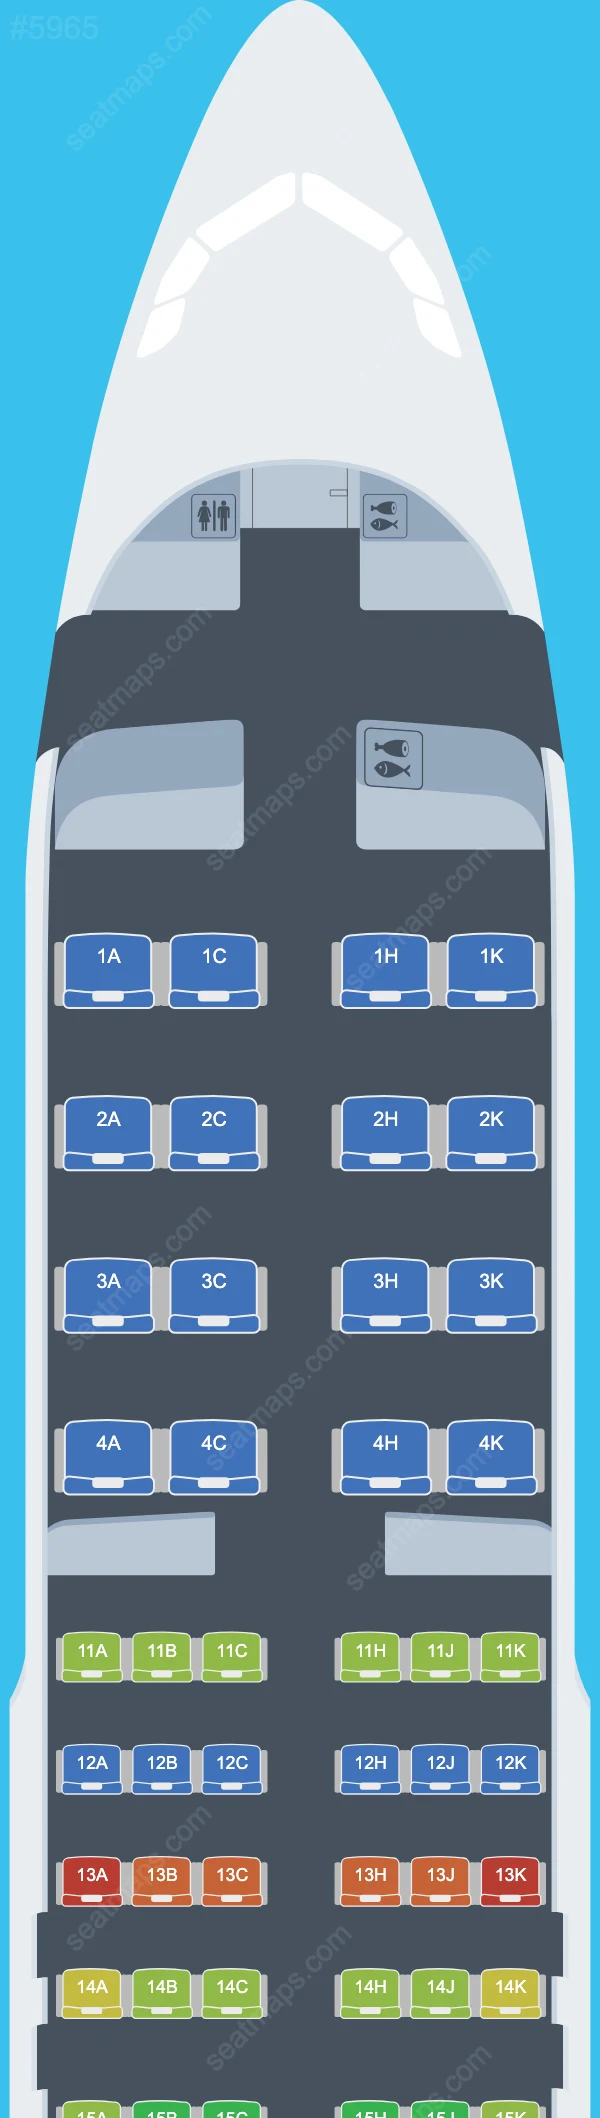 Kuwait Airways Airbus A320 Seat Maps A320-200